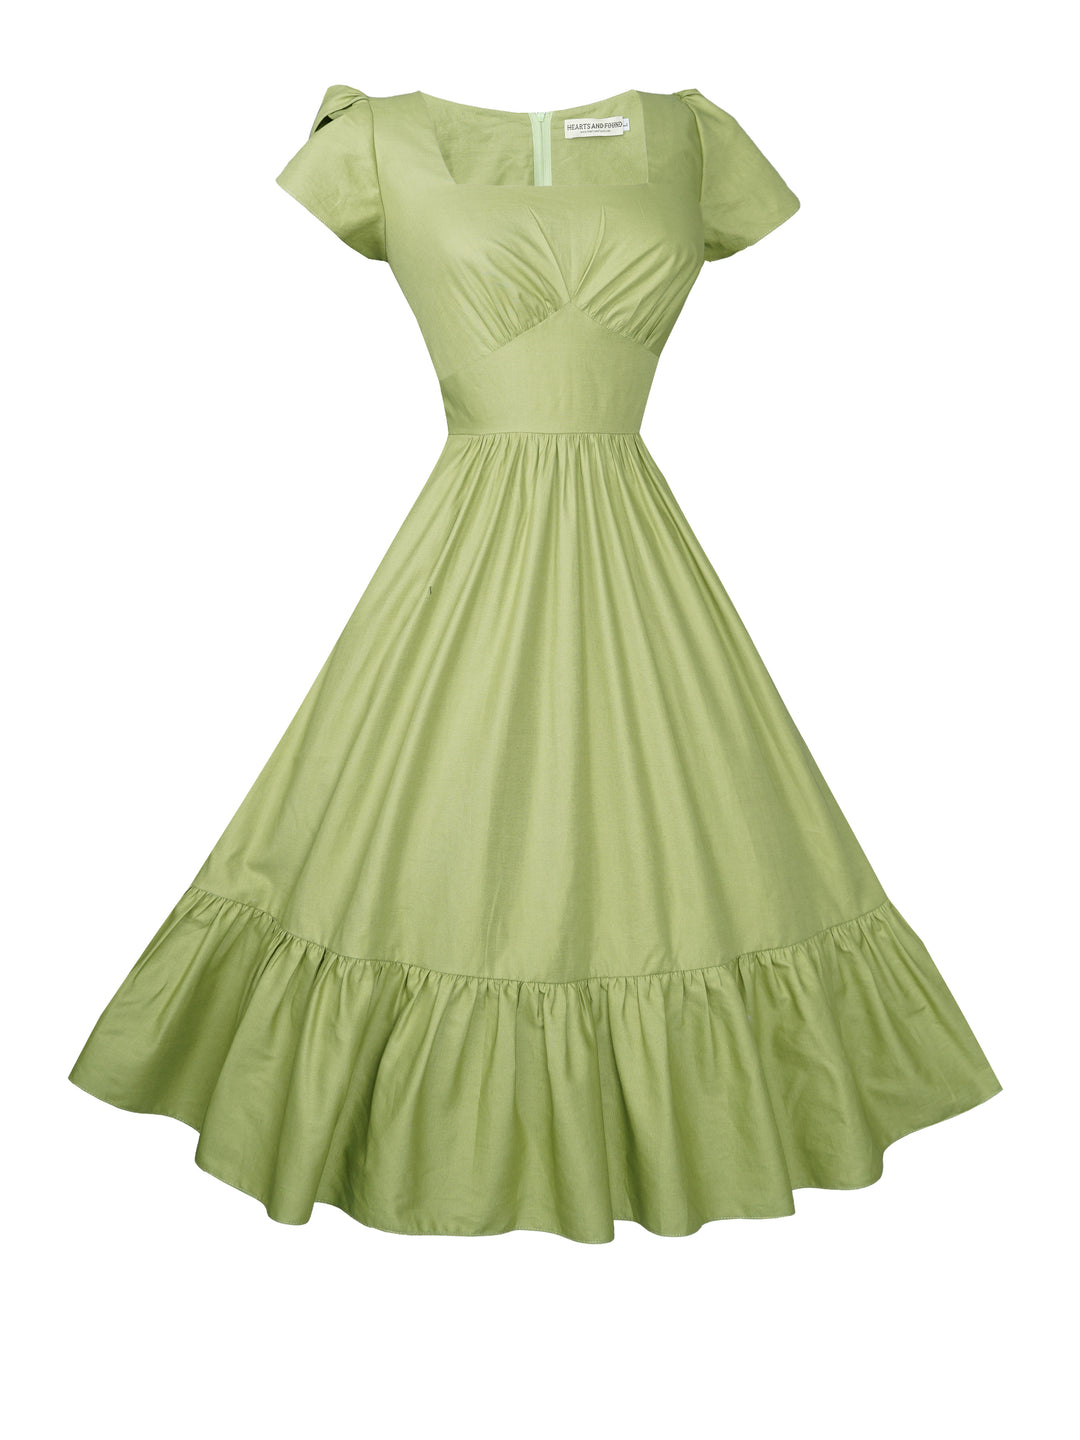 MTO - Ava Dress in Matcha Green Cotton